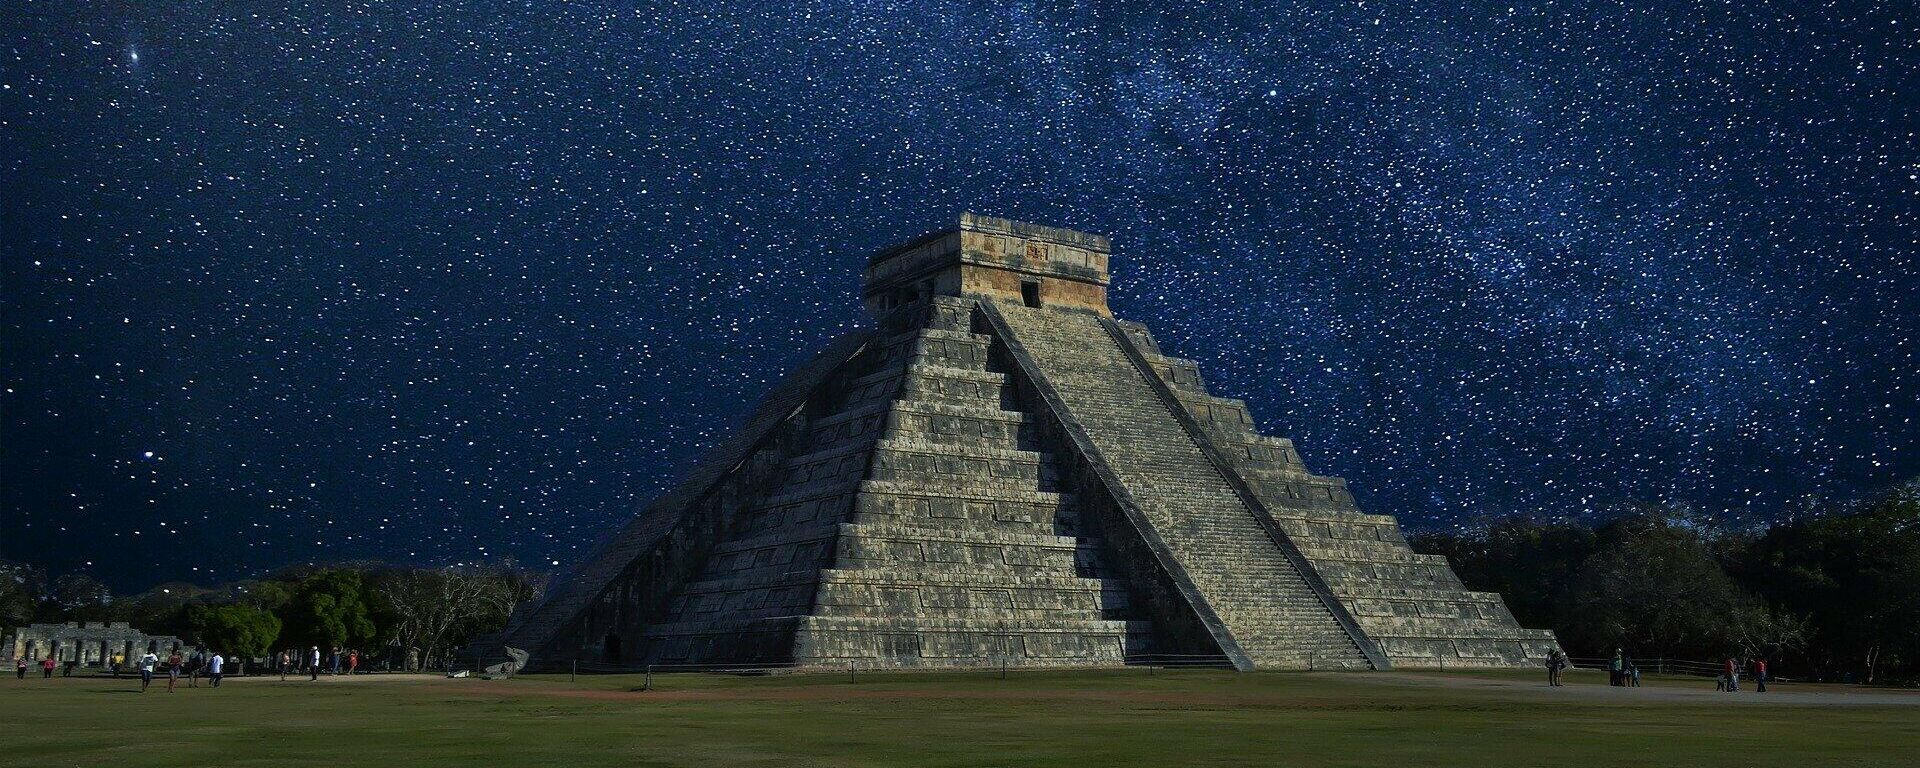 La pirámide maya Chichen Itza - Sputnik Mundo, 1920, 21.12.2021